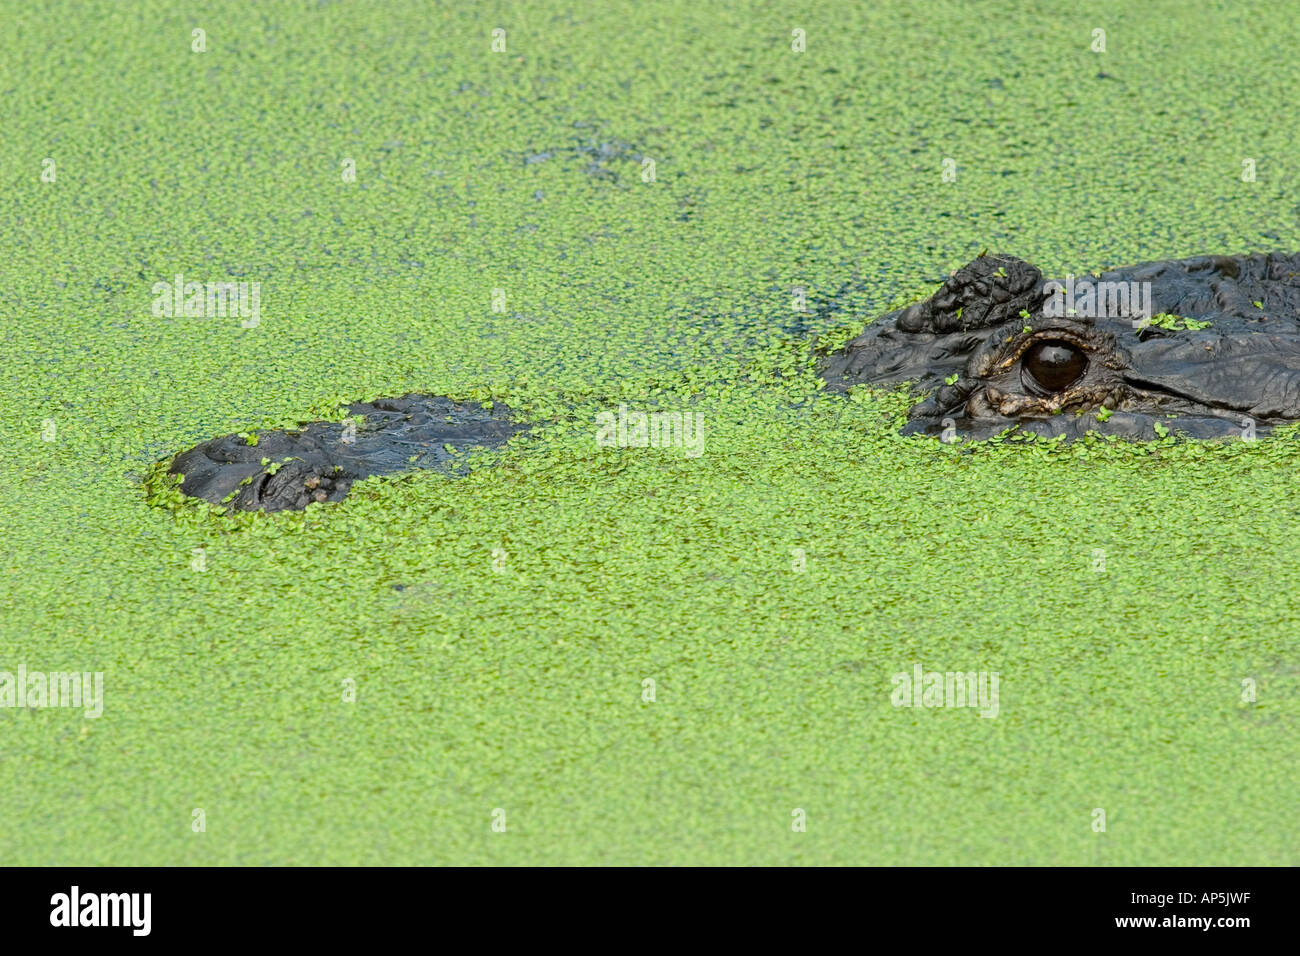 USA, Florida, Jacksonville zoo, American alligator in duck weed, Alligator mississippiensis Stock Photo